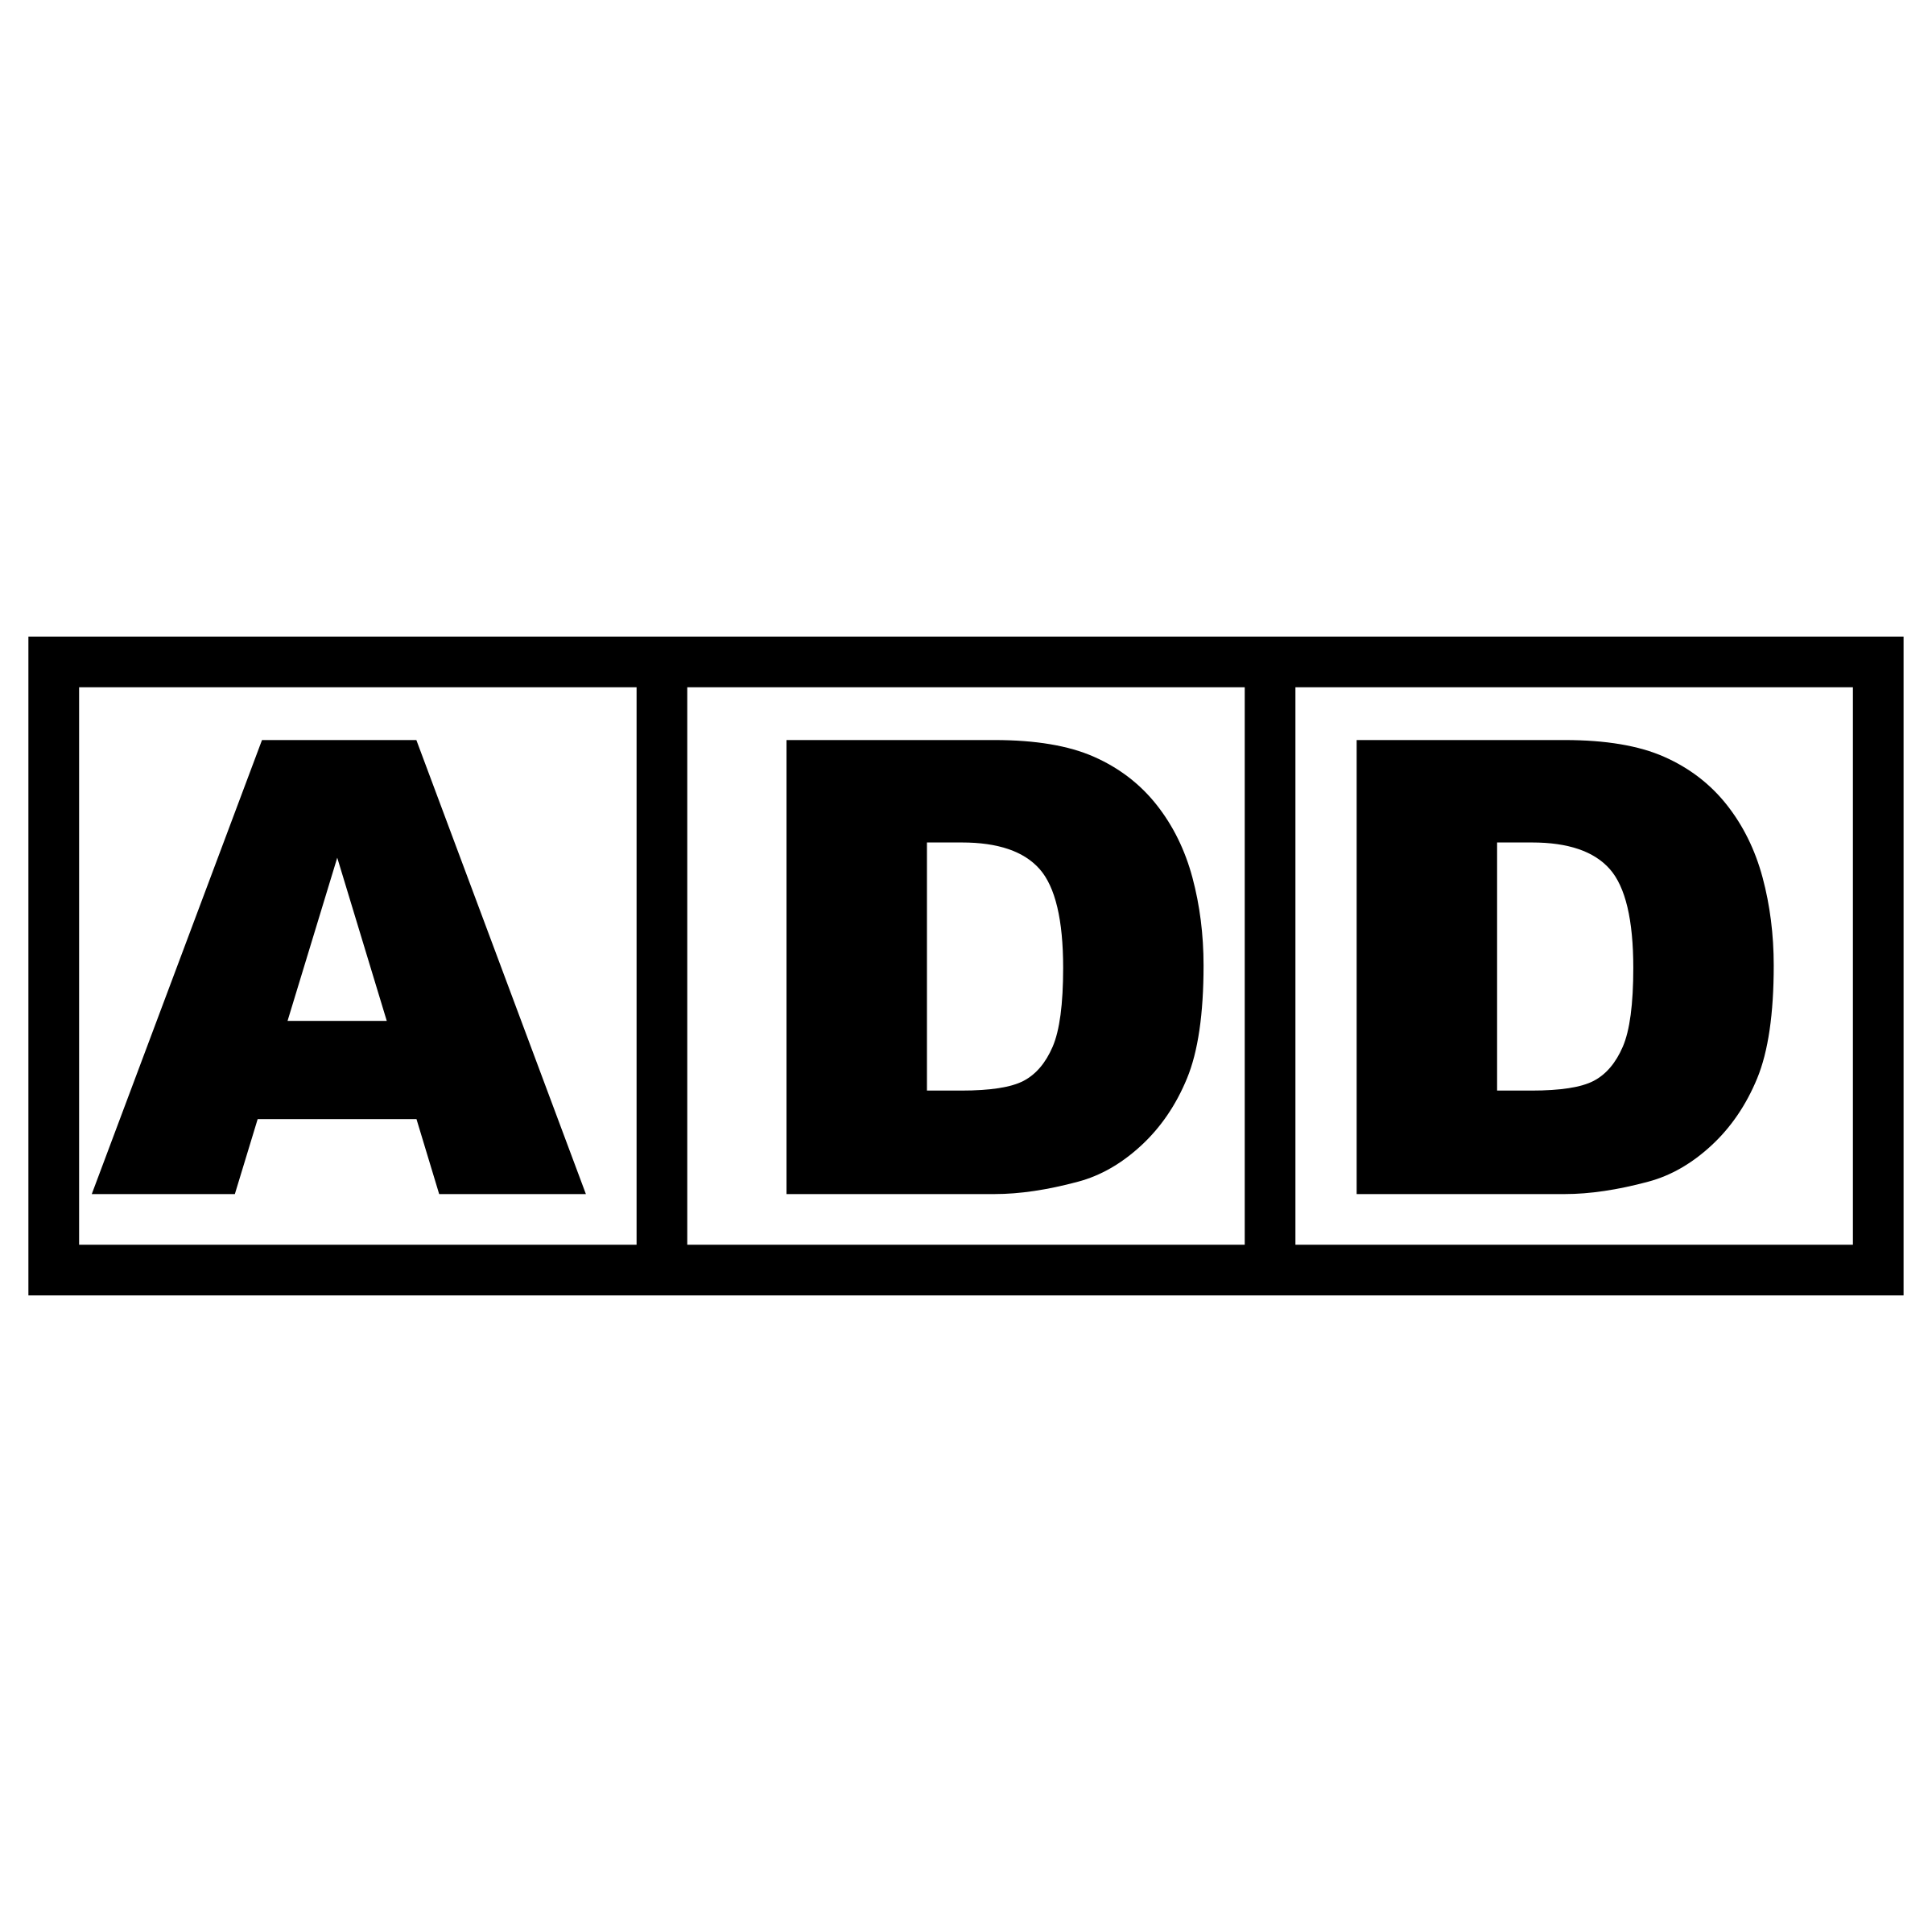 Add Logo - ADD Logo PNG Transparent & SVG Vector - Freebie Supply